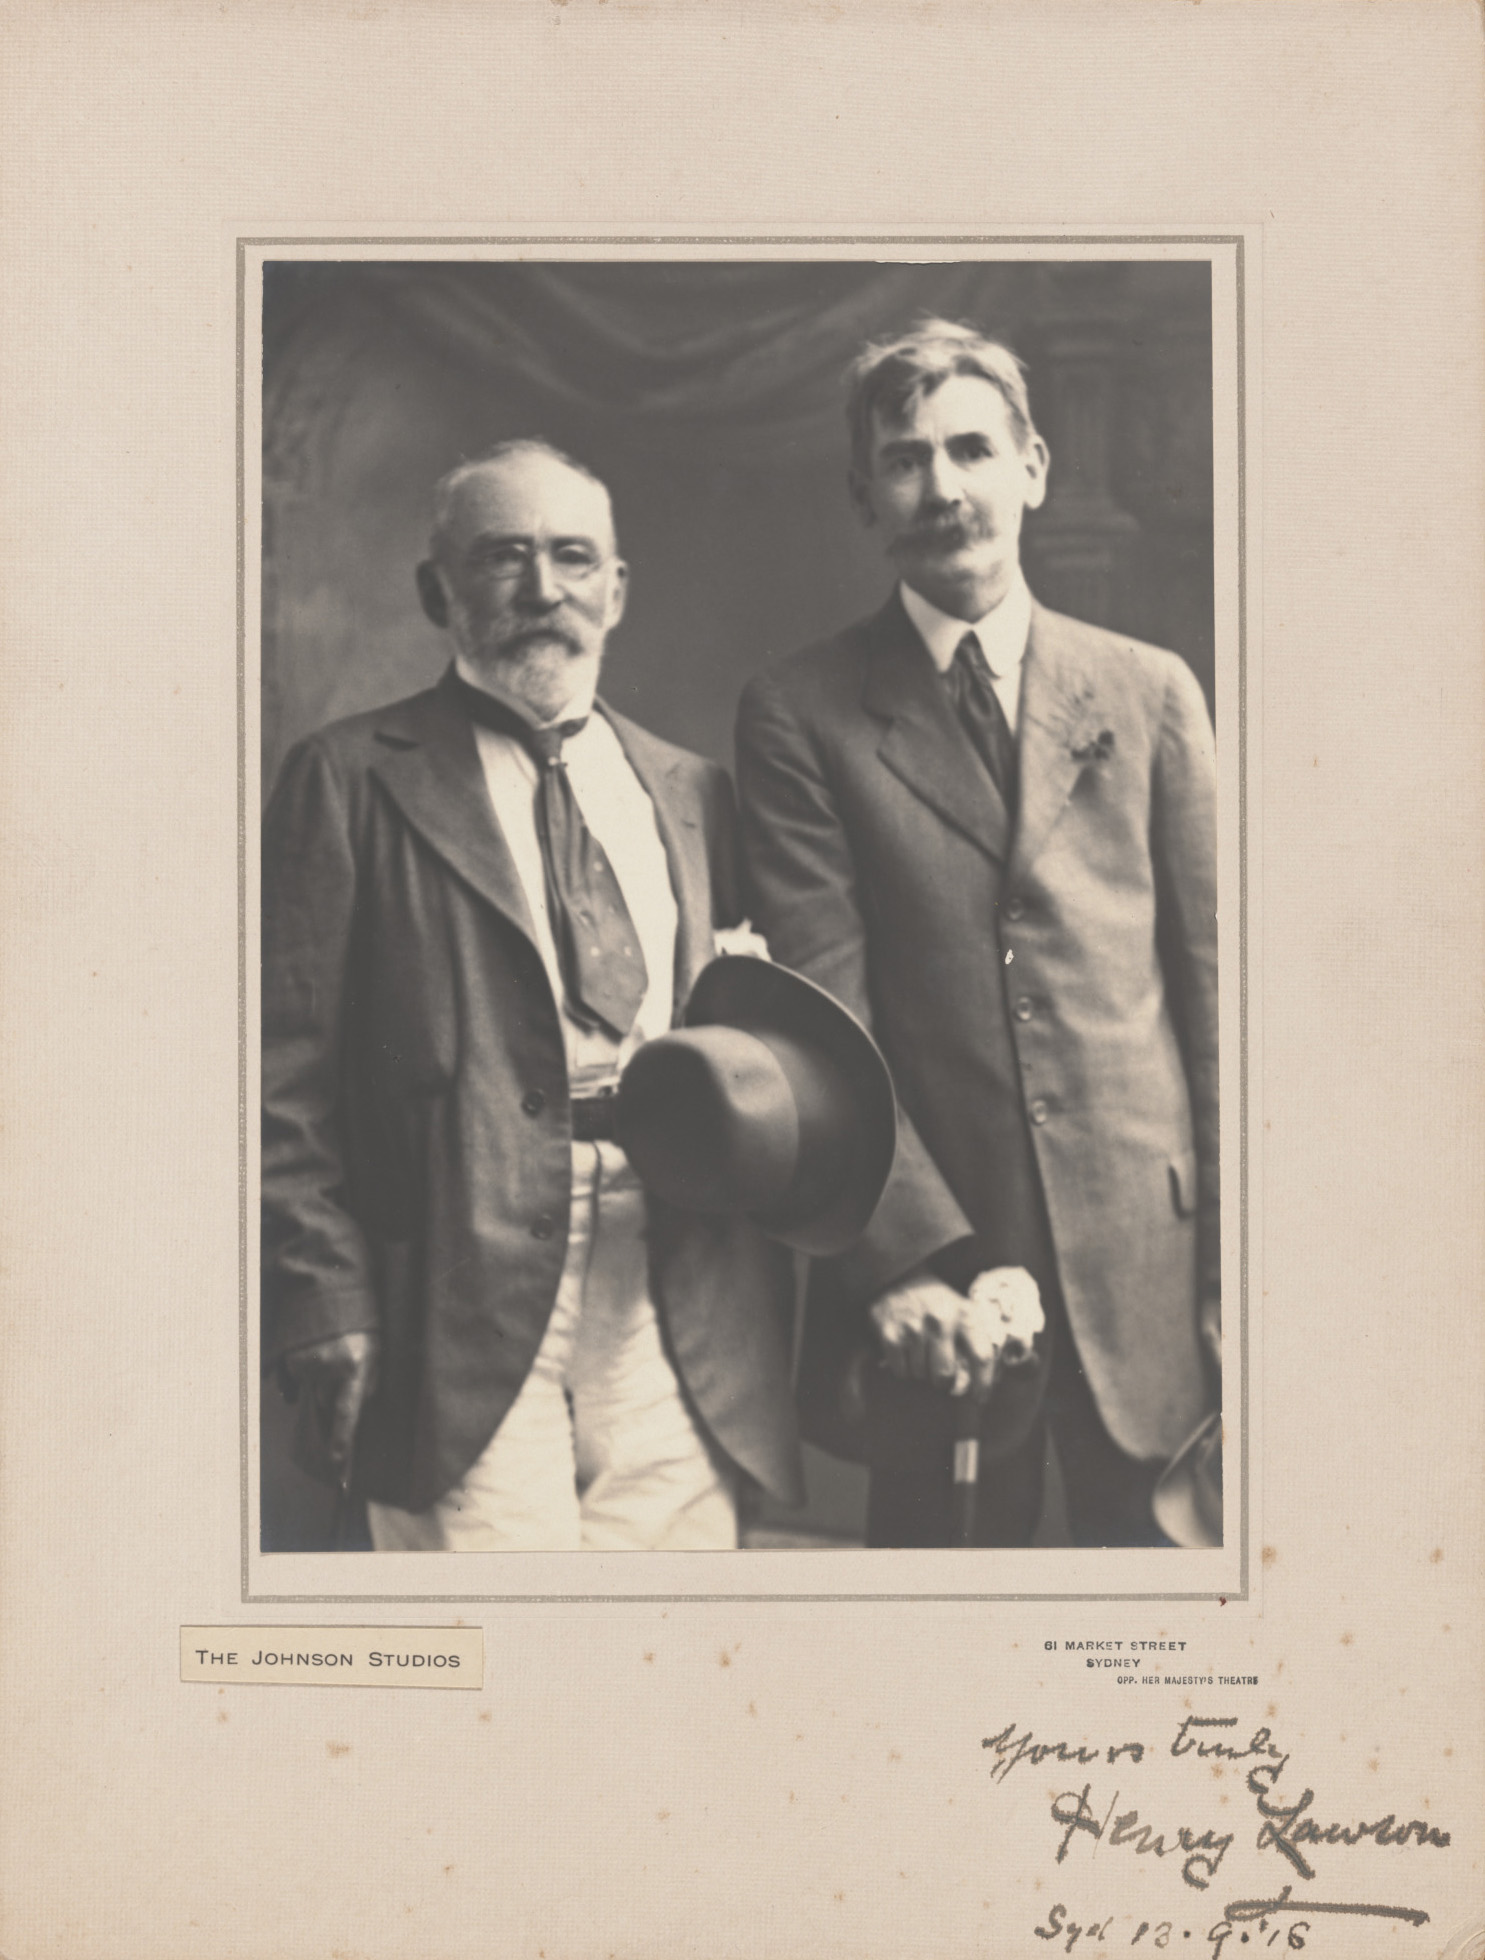 Portrait of J.F. Archibald and Henry Lawson, Sydney, 1918.